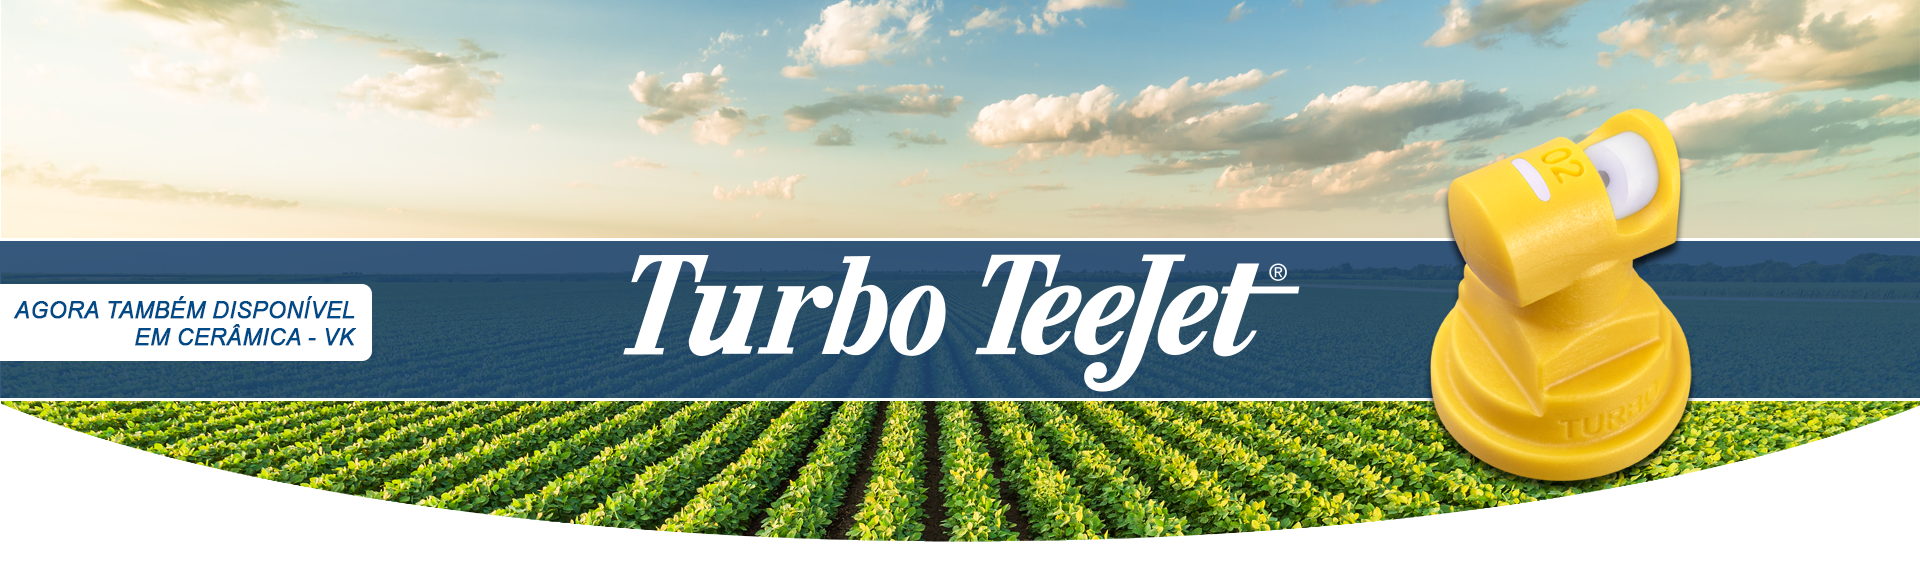 Turbo TeeJet® - Agora Também Disponível em Cerâmica - VK